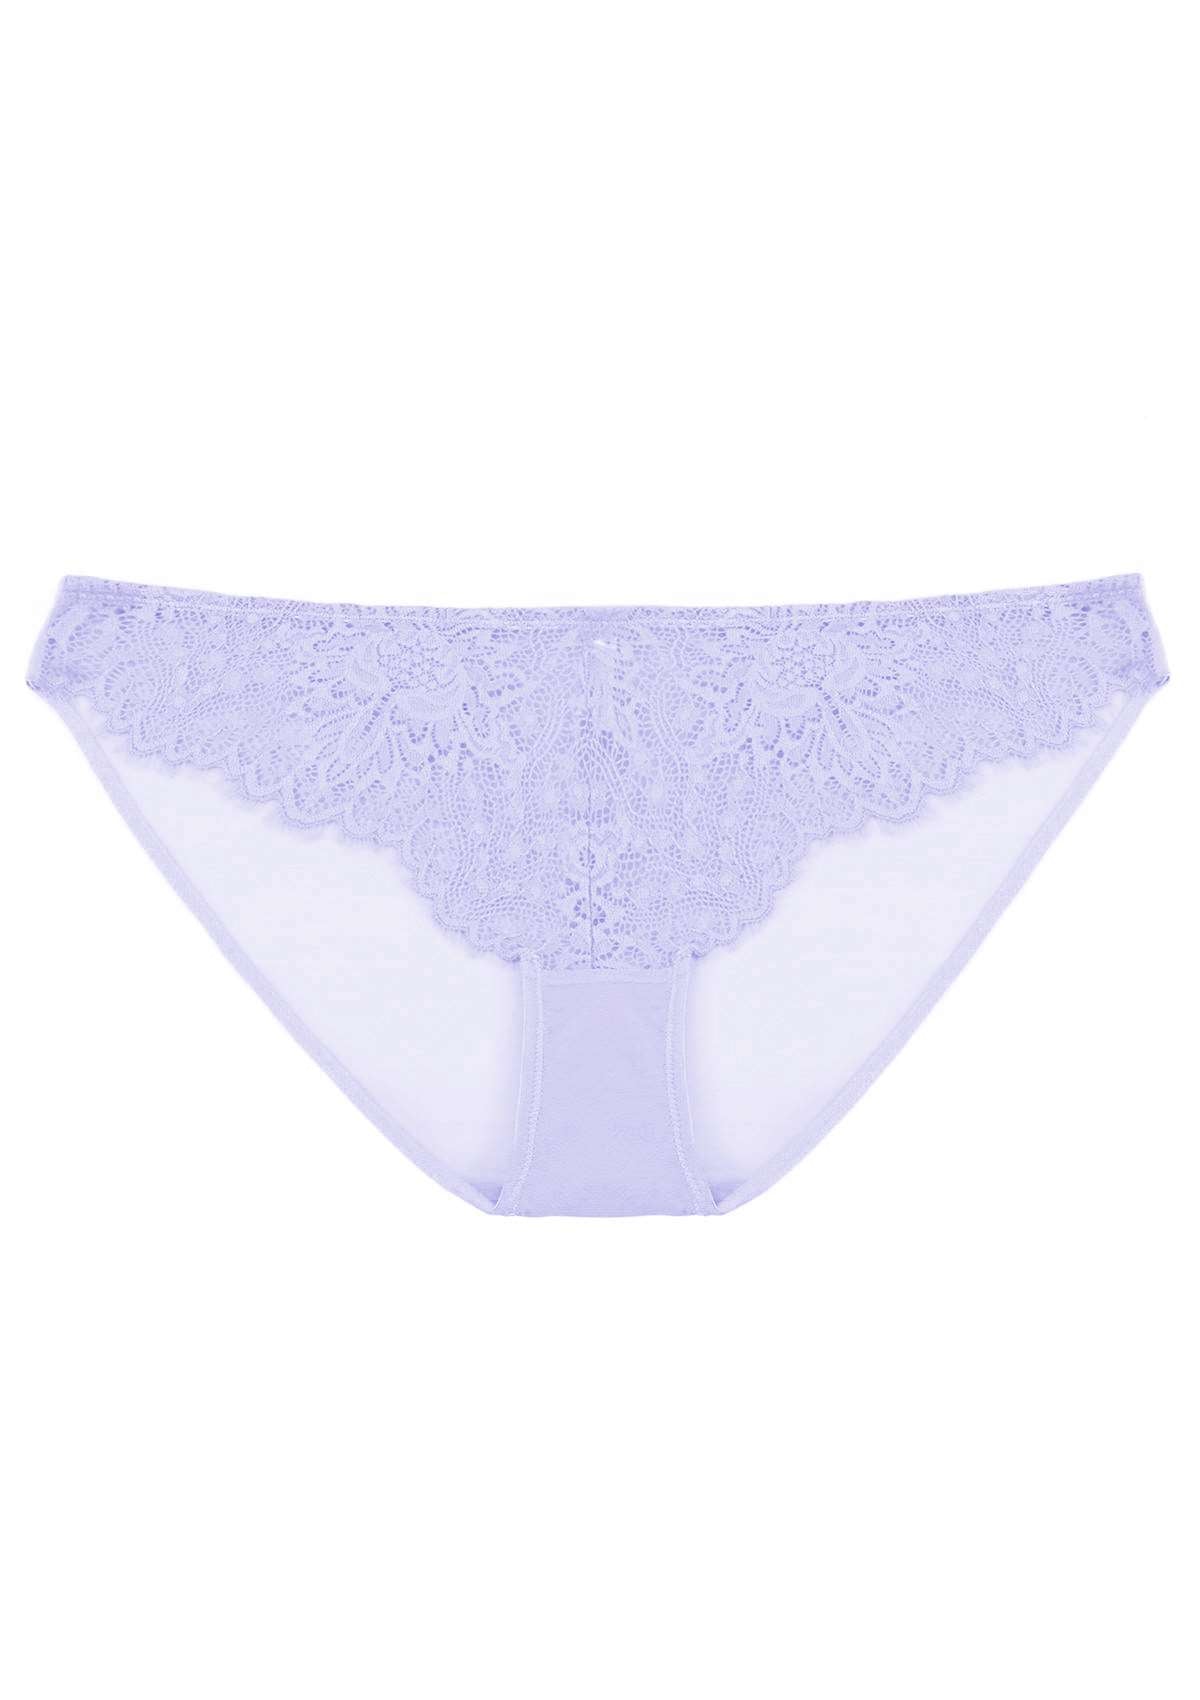 HSIA Sunflower Exquisite Purple Lace Bikini Underwear - M / Purple